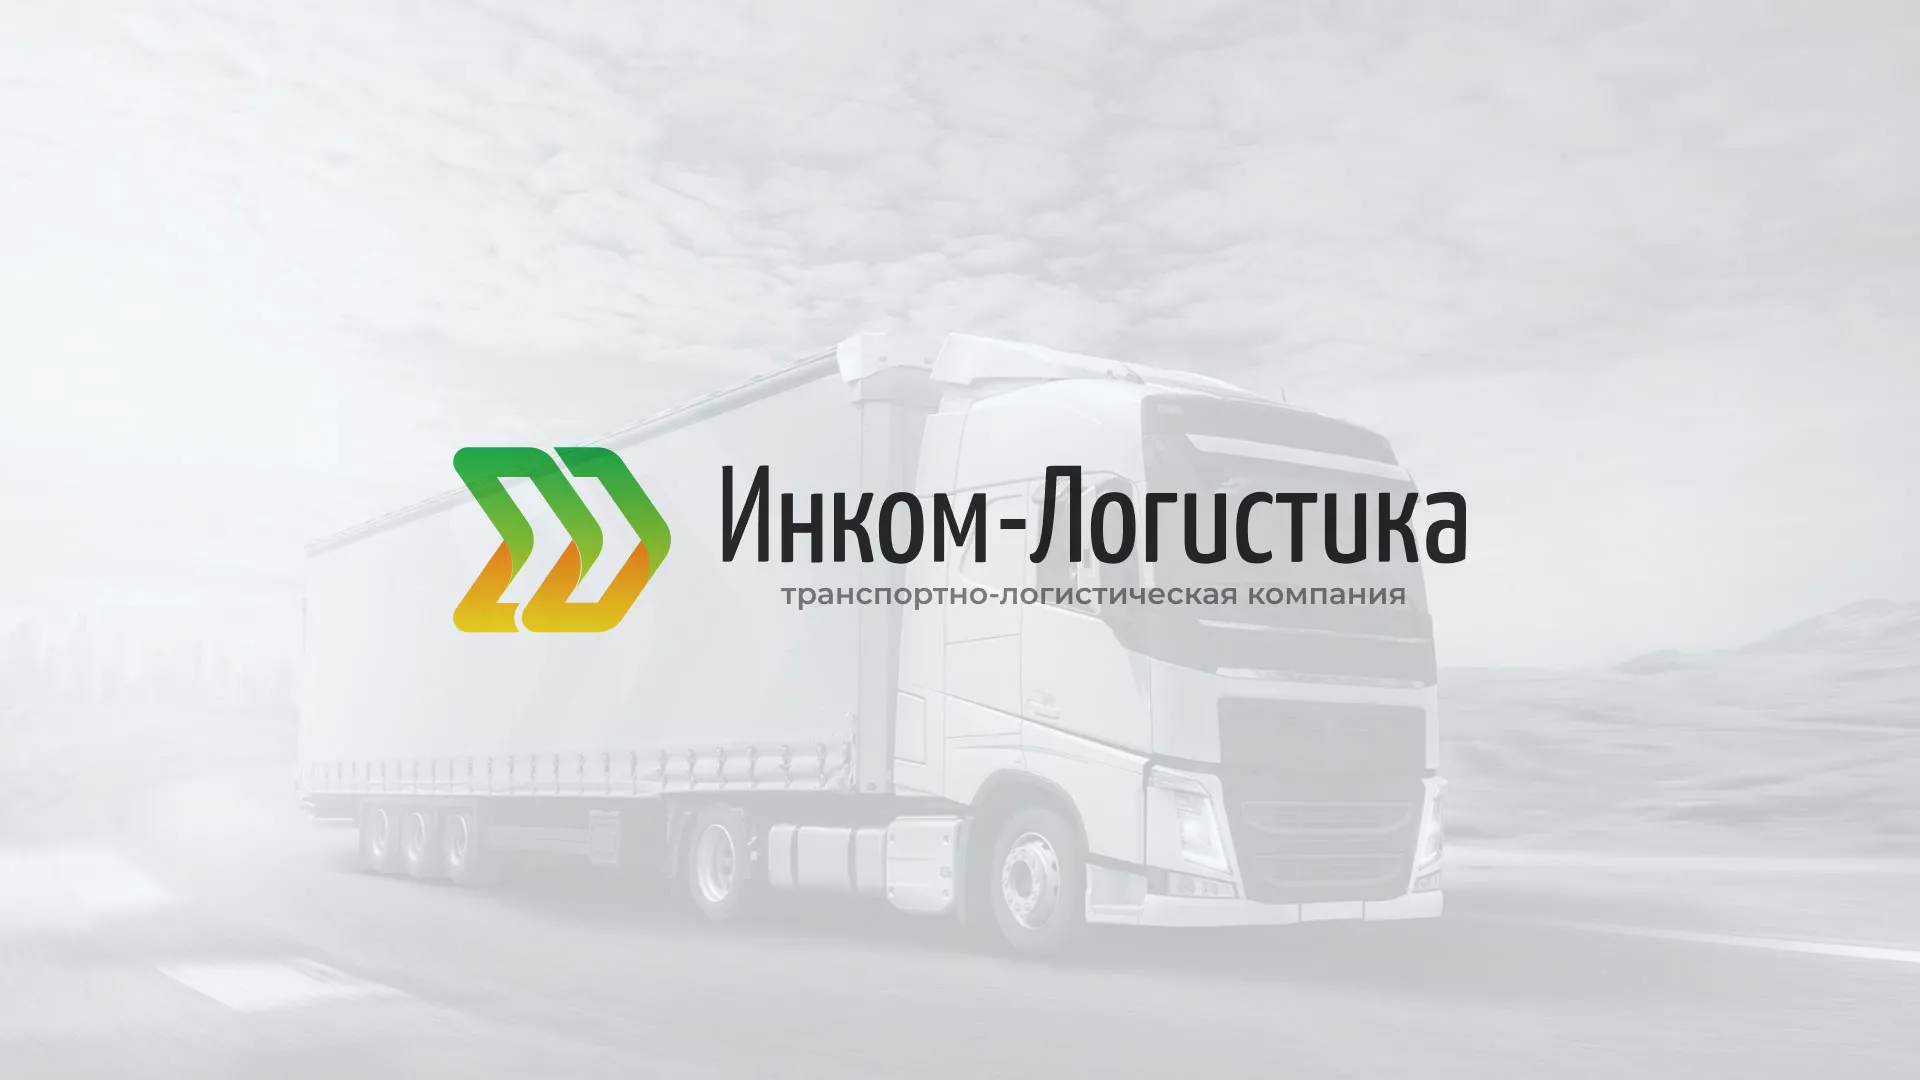 Разработка логотипа и сайта компании «Инком-Логистика» в Волгодонске